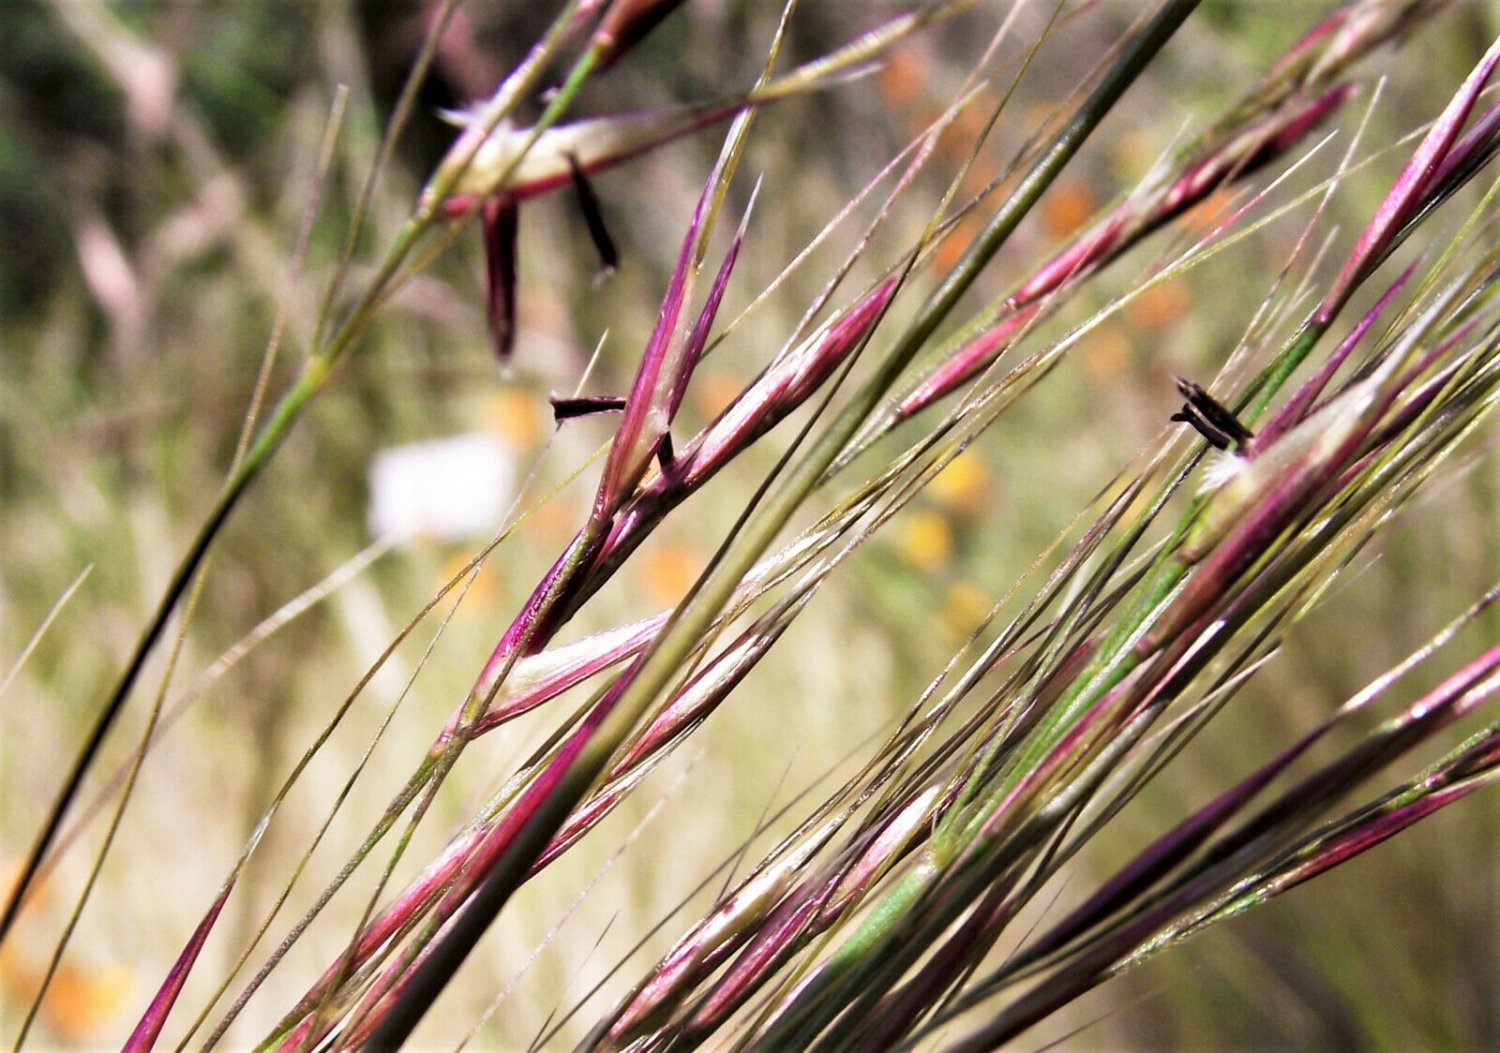 Nezpar Oryzopsis Hymenoides Sand Rice 500 seeds